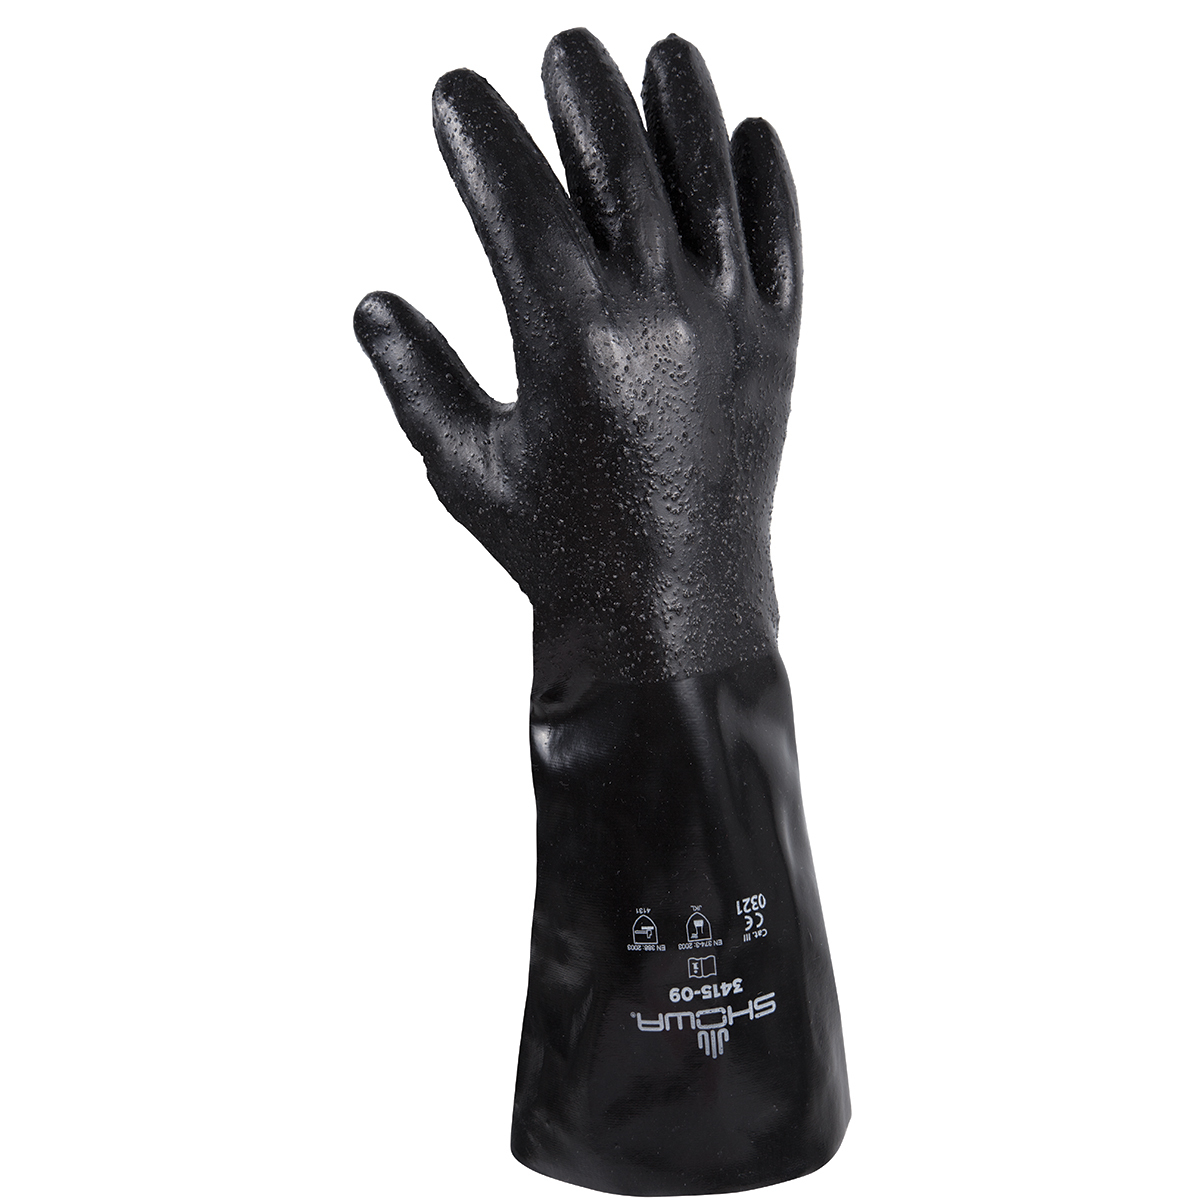 SHOWA® Black 15 Gauge Seamless Knit Lined Neoprene Chemical Resistant Gloves